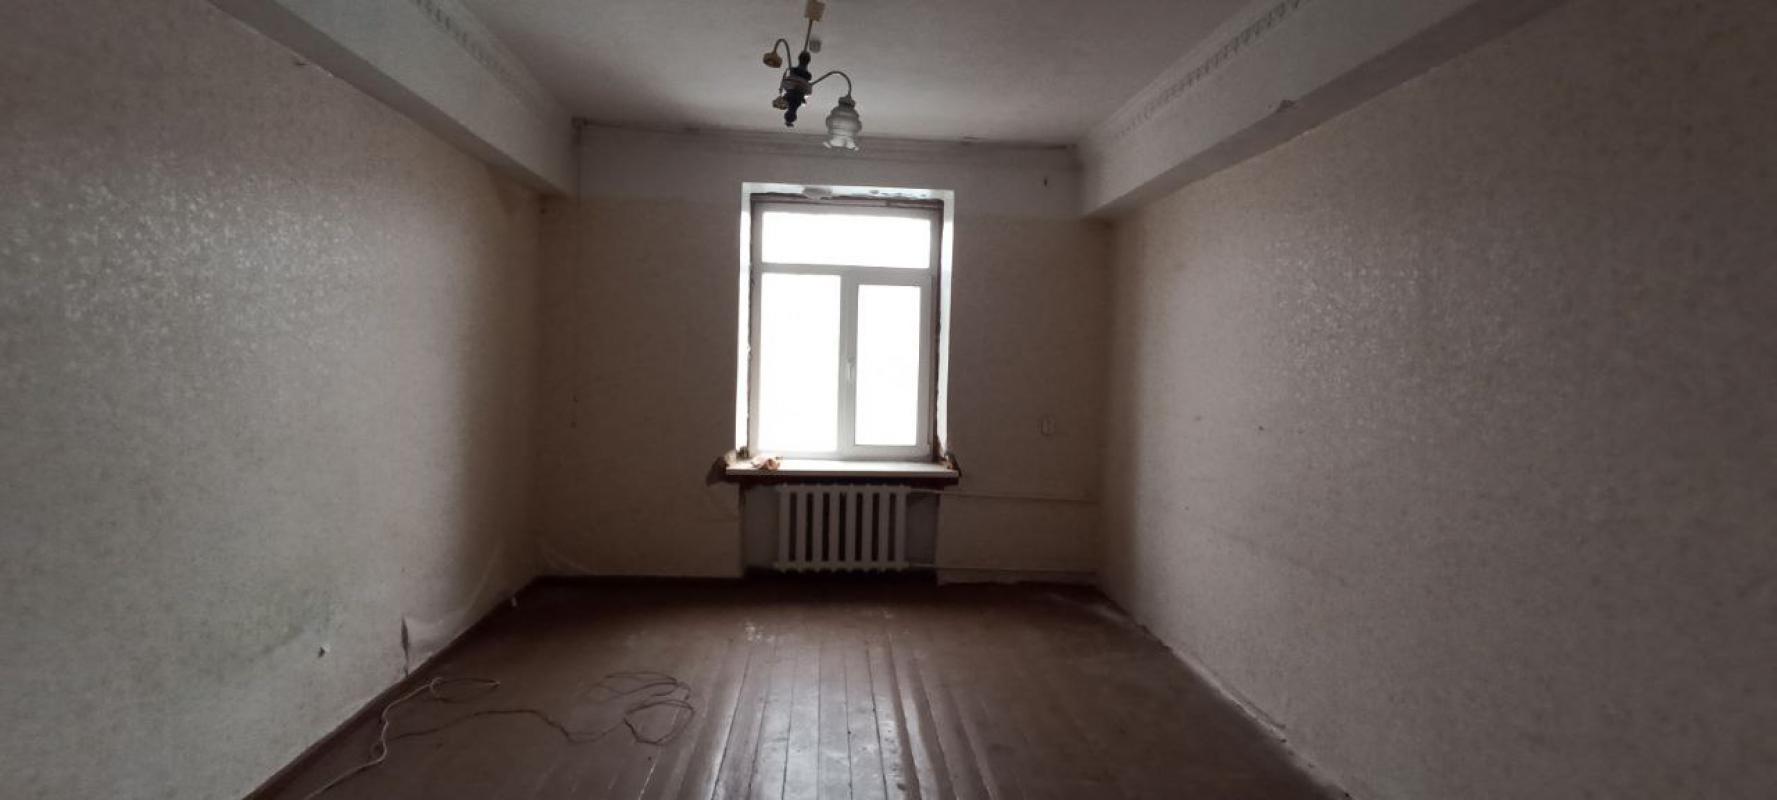 На продаже комната в общежитии, по адресу: г. - Новотроицк